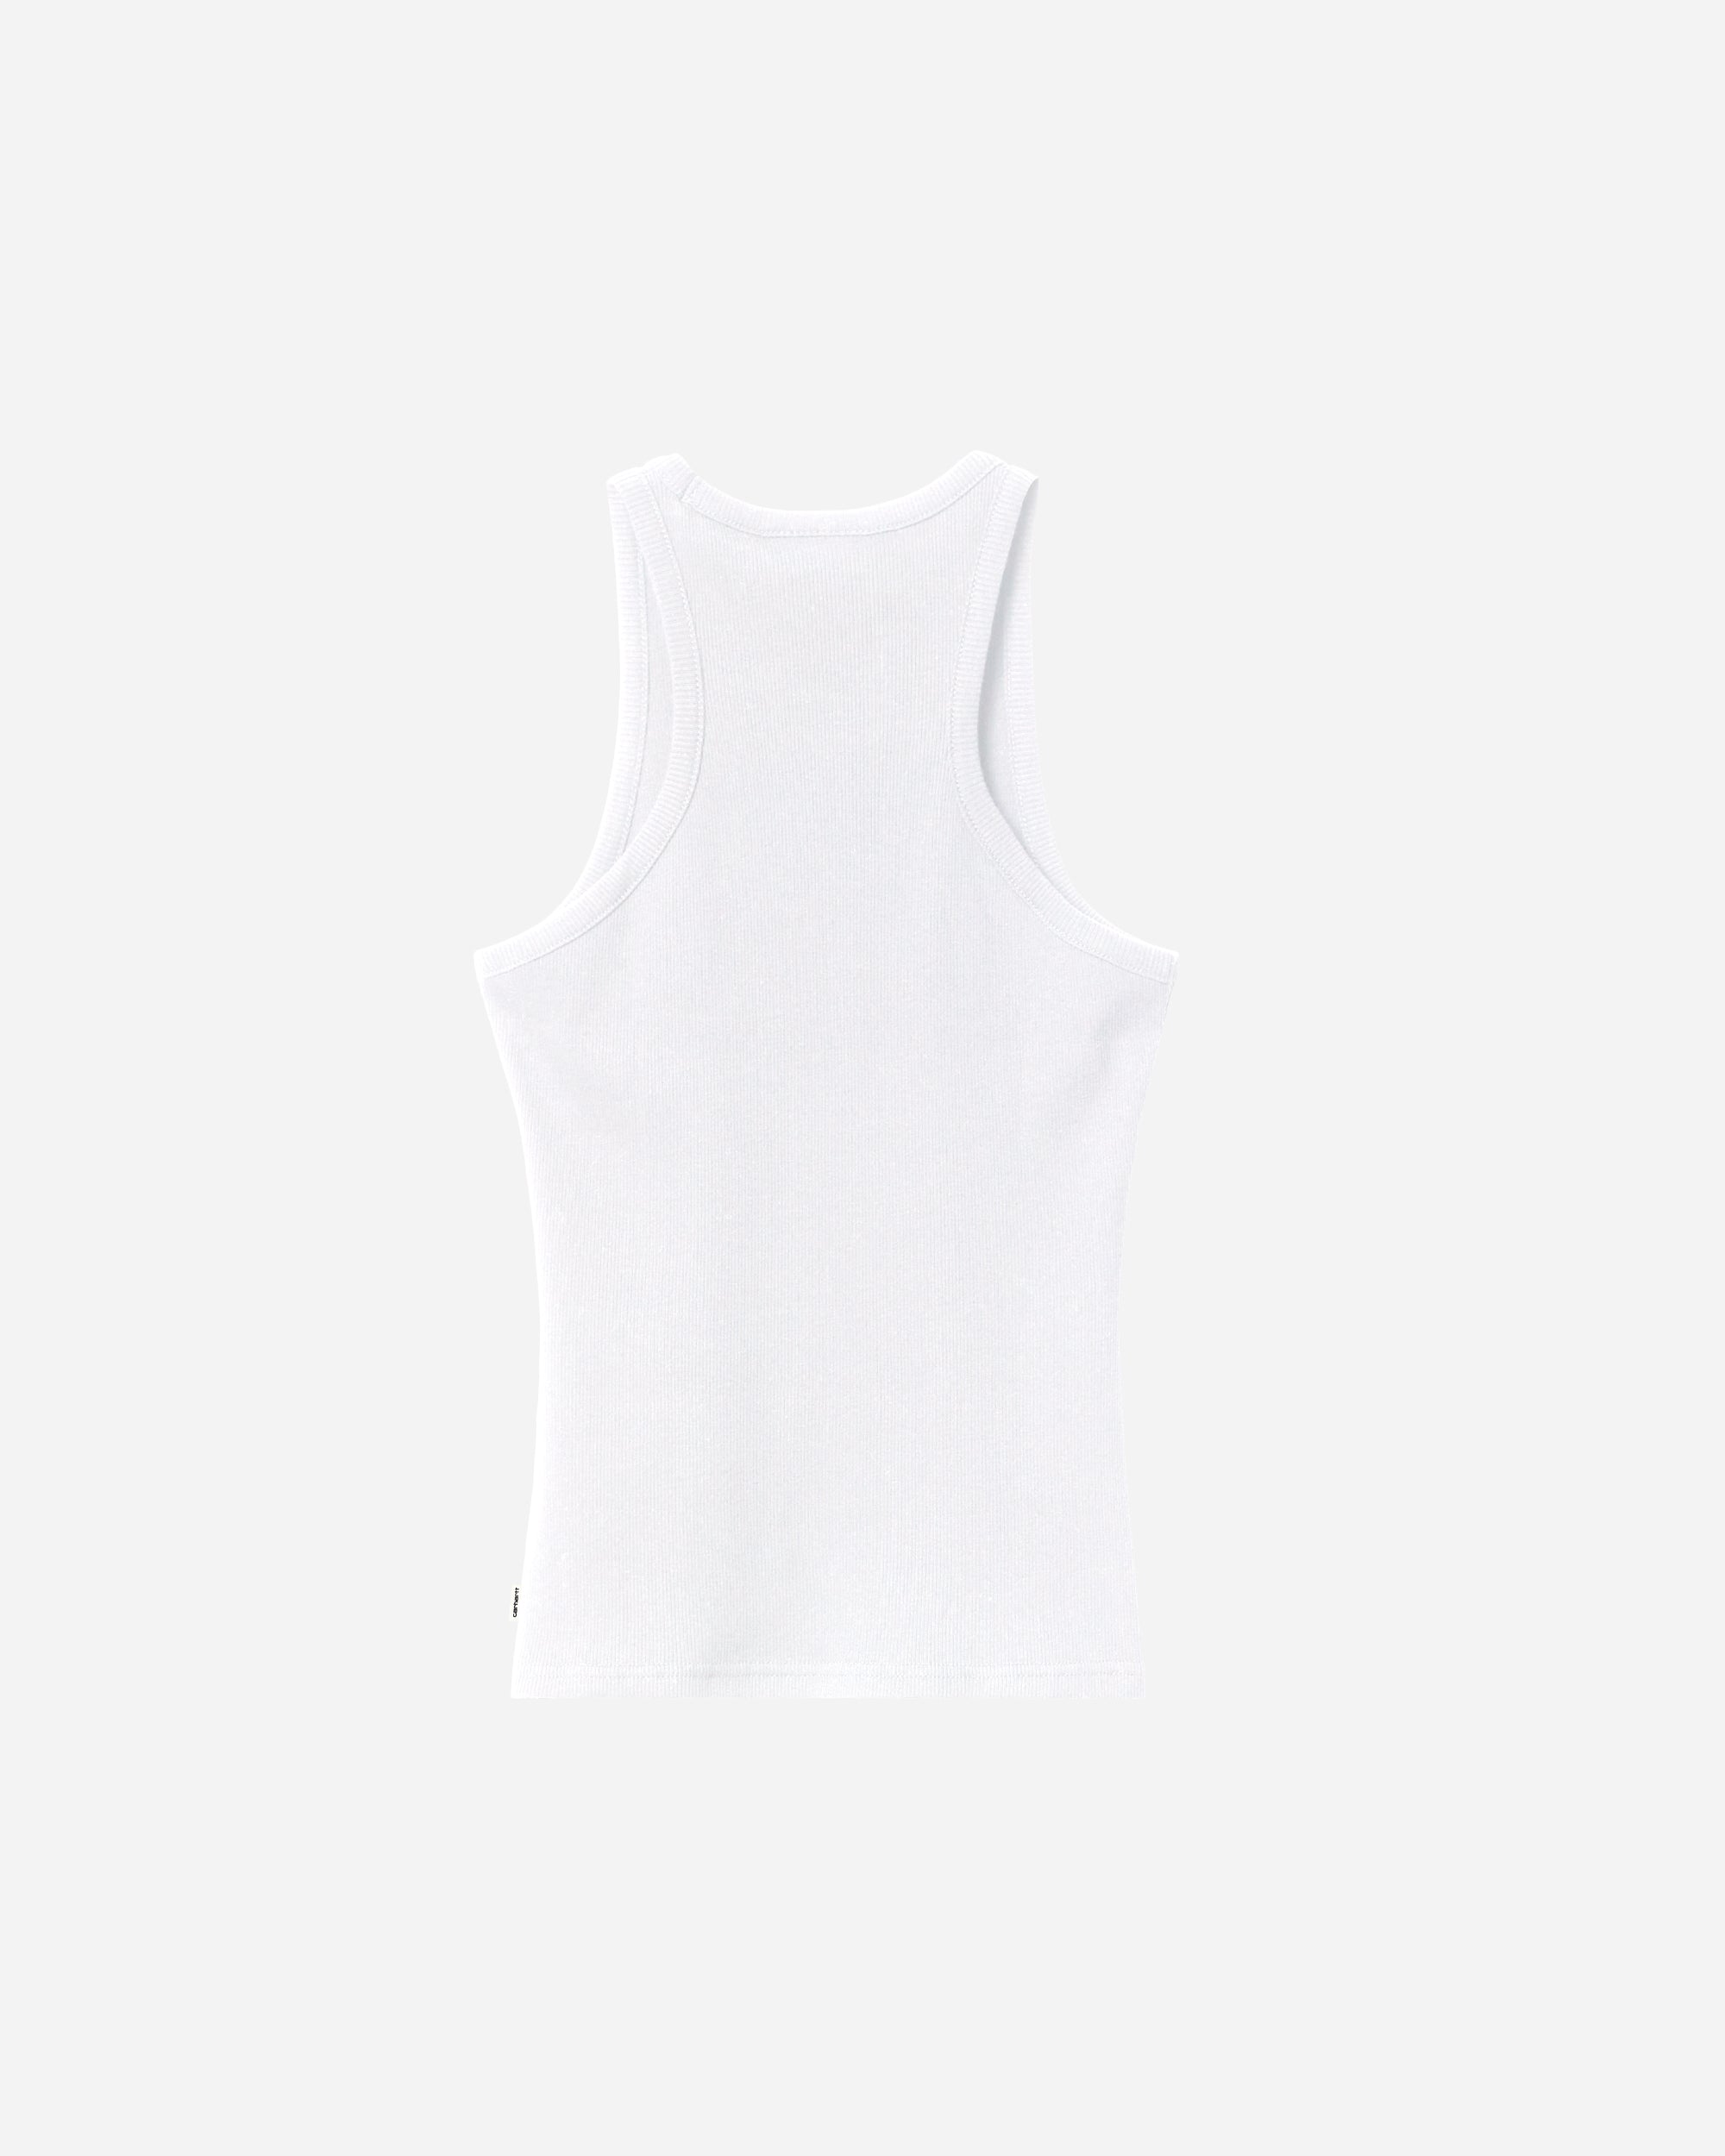 Carhartt WIP Porter A-Shirt White I033208-02XX